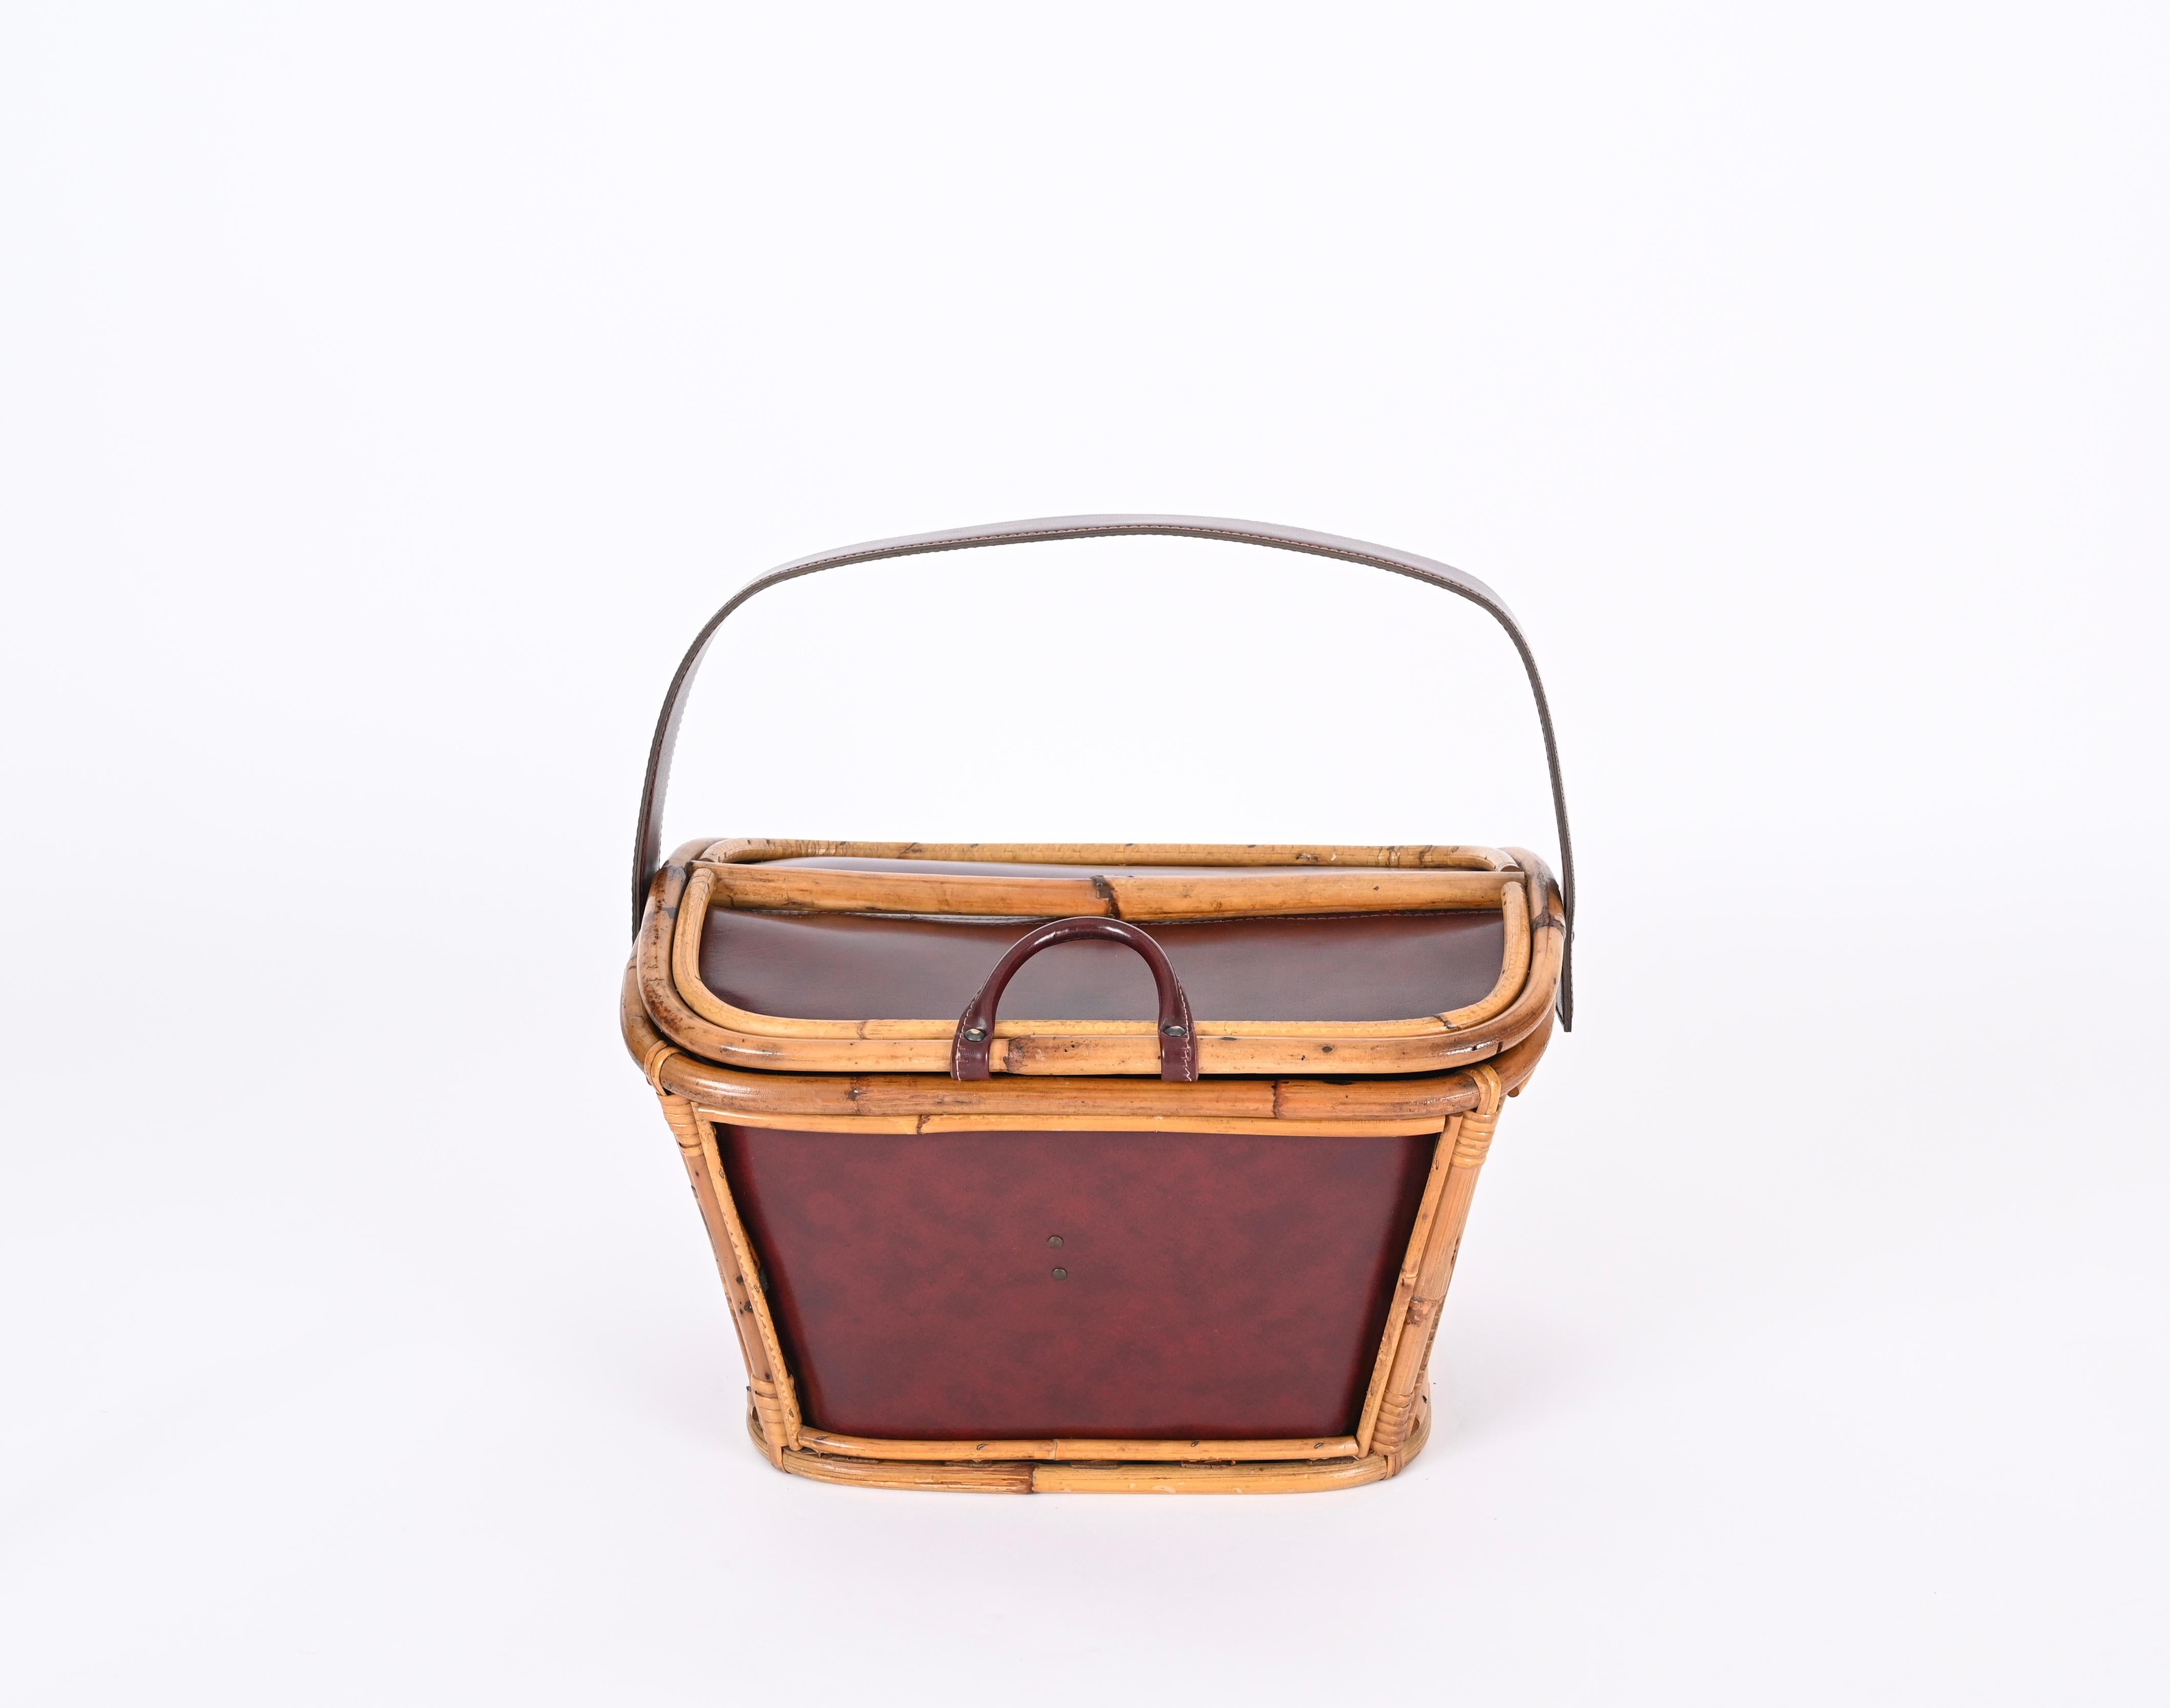 20th Century Midcentury Rattan, Wicker and Leather Italian Decorative Basket Bag, 1960s